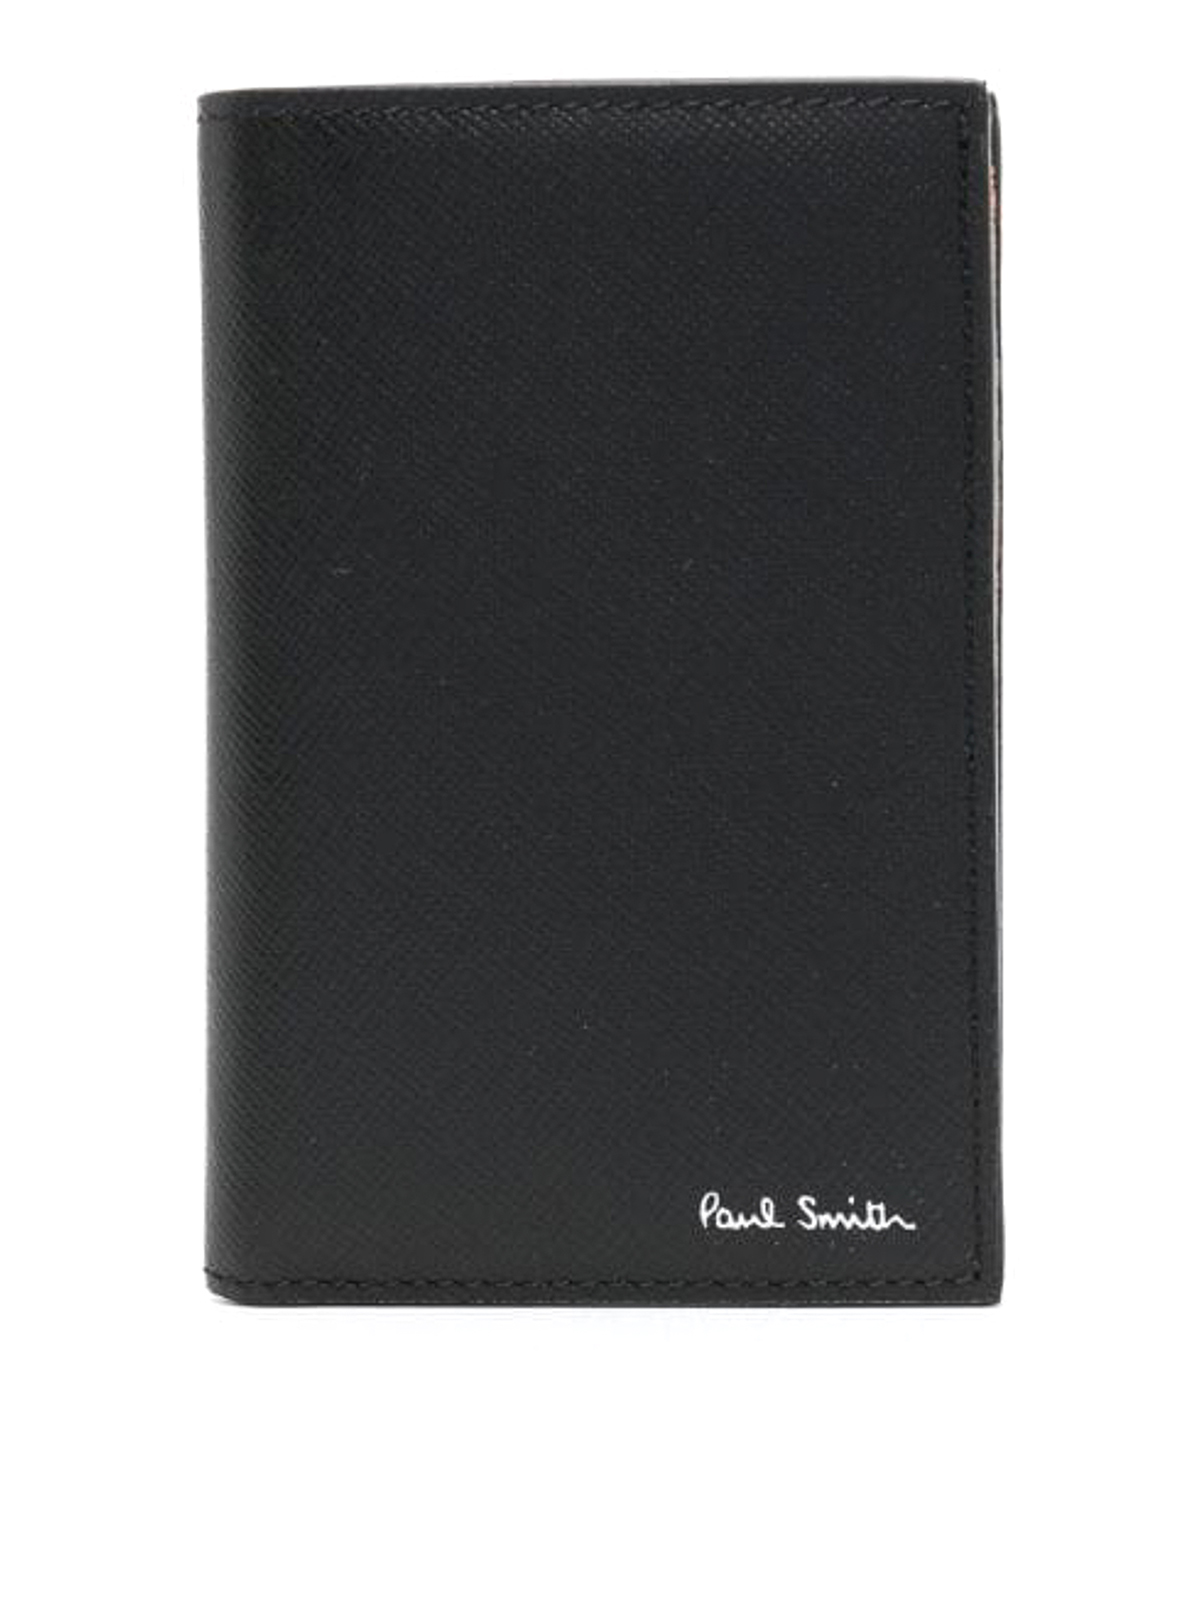 Paul Smith Logo Leather Wallet In Black